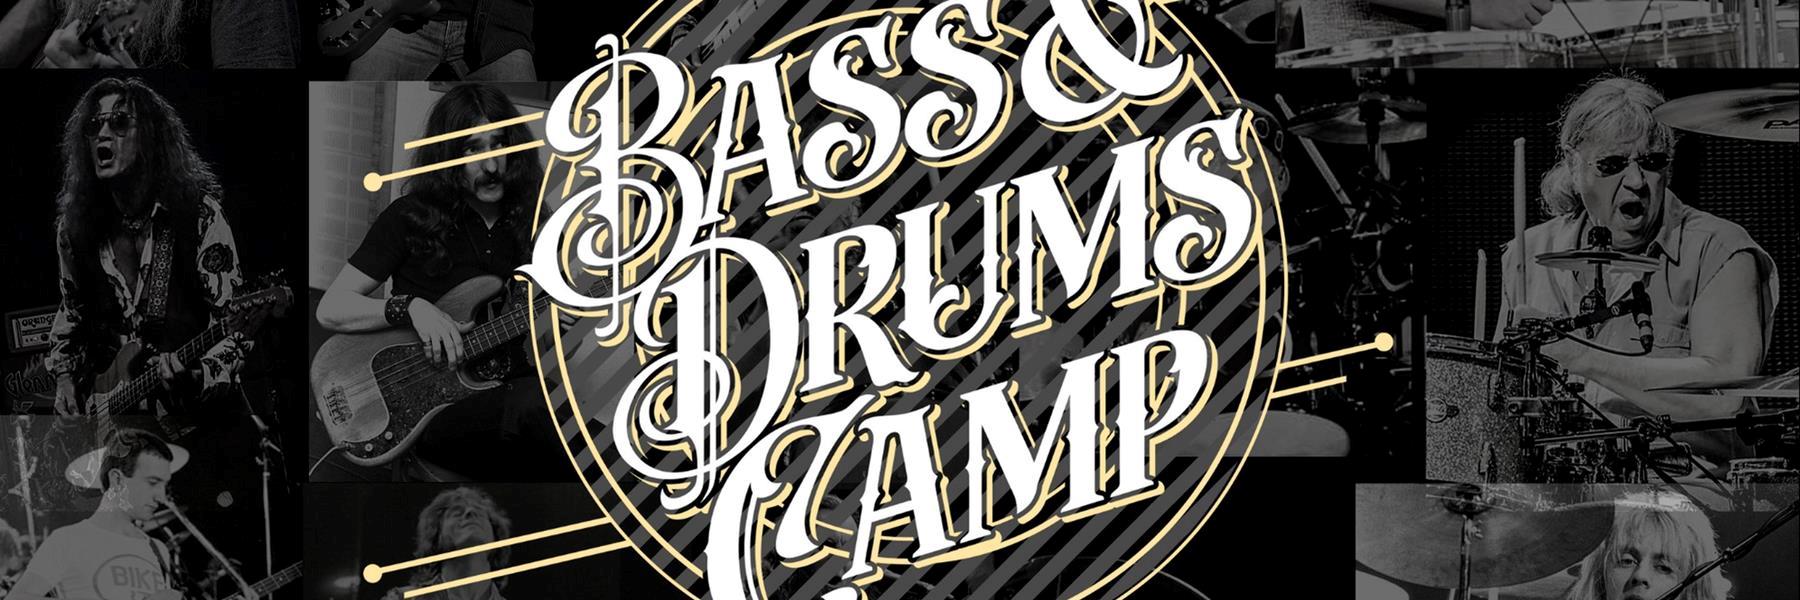 Bass & Drums Camp